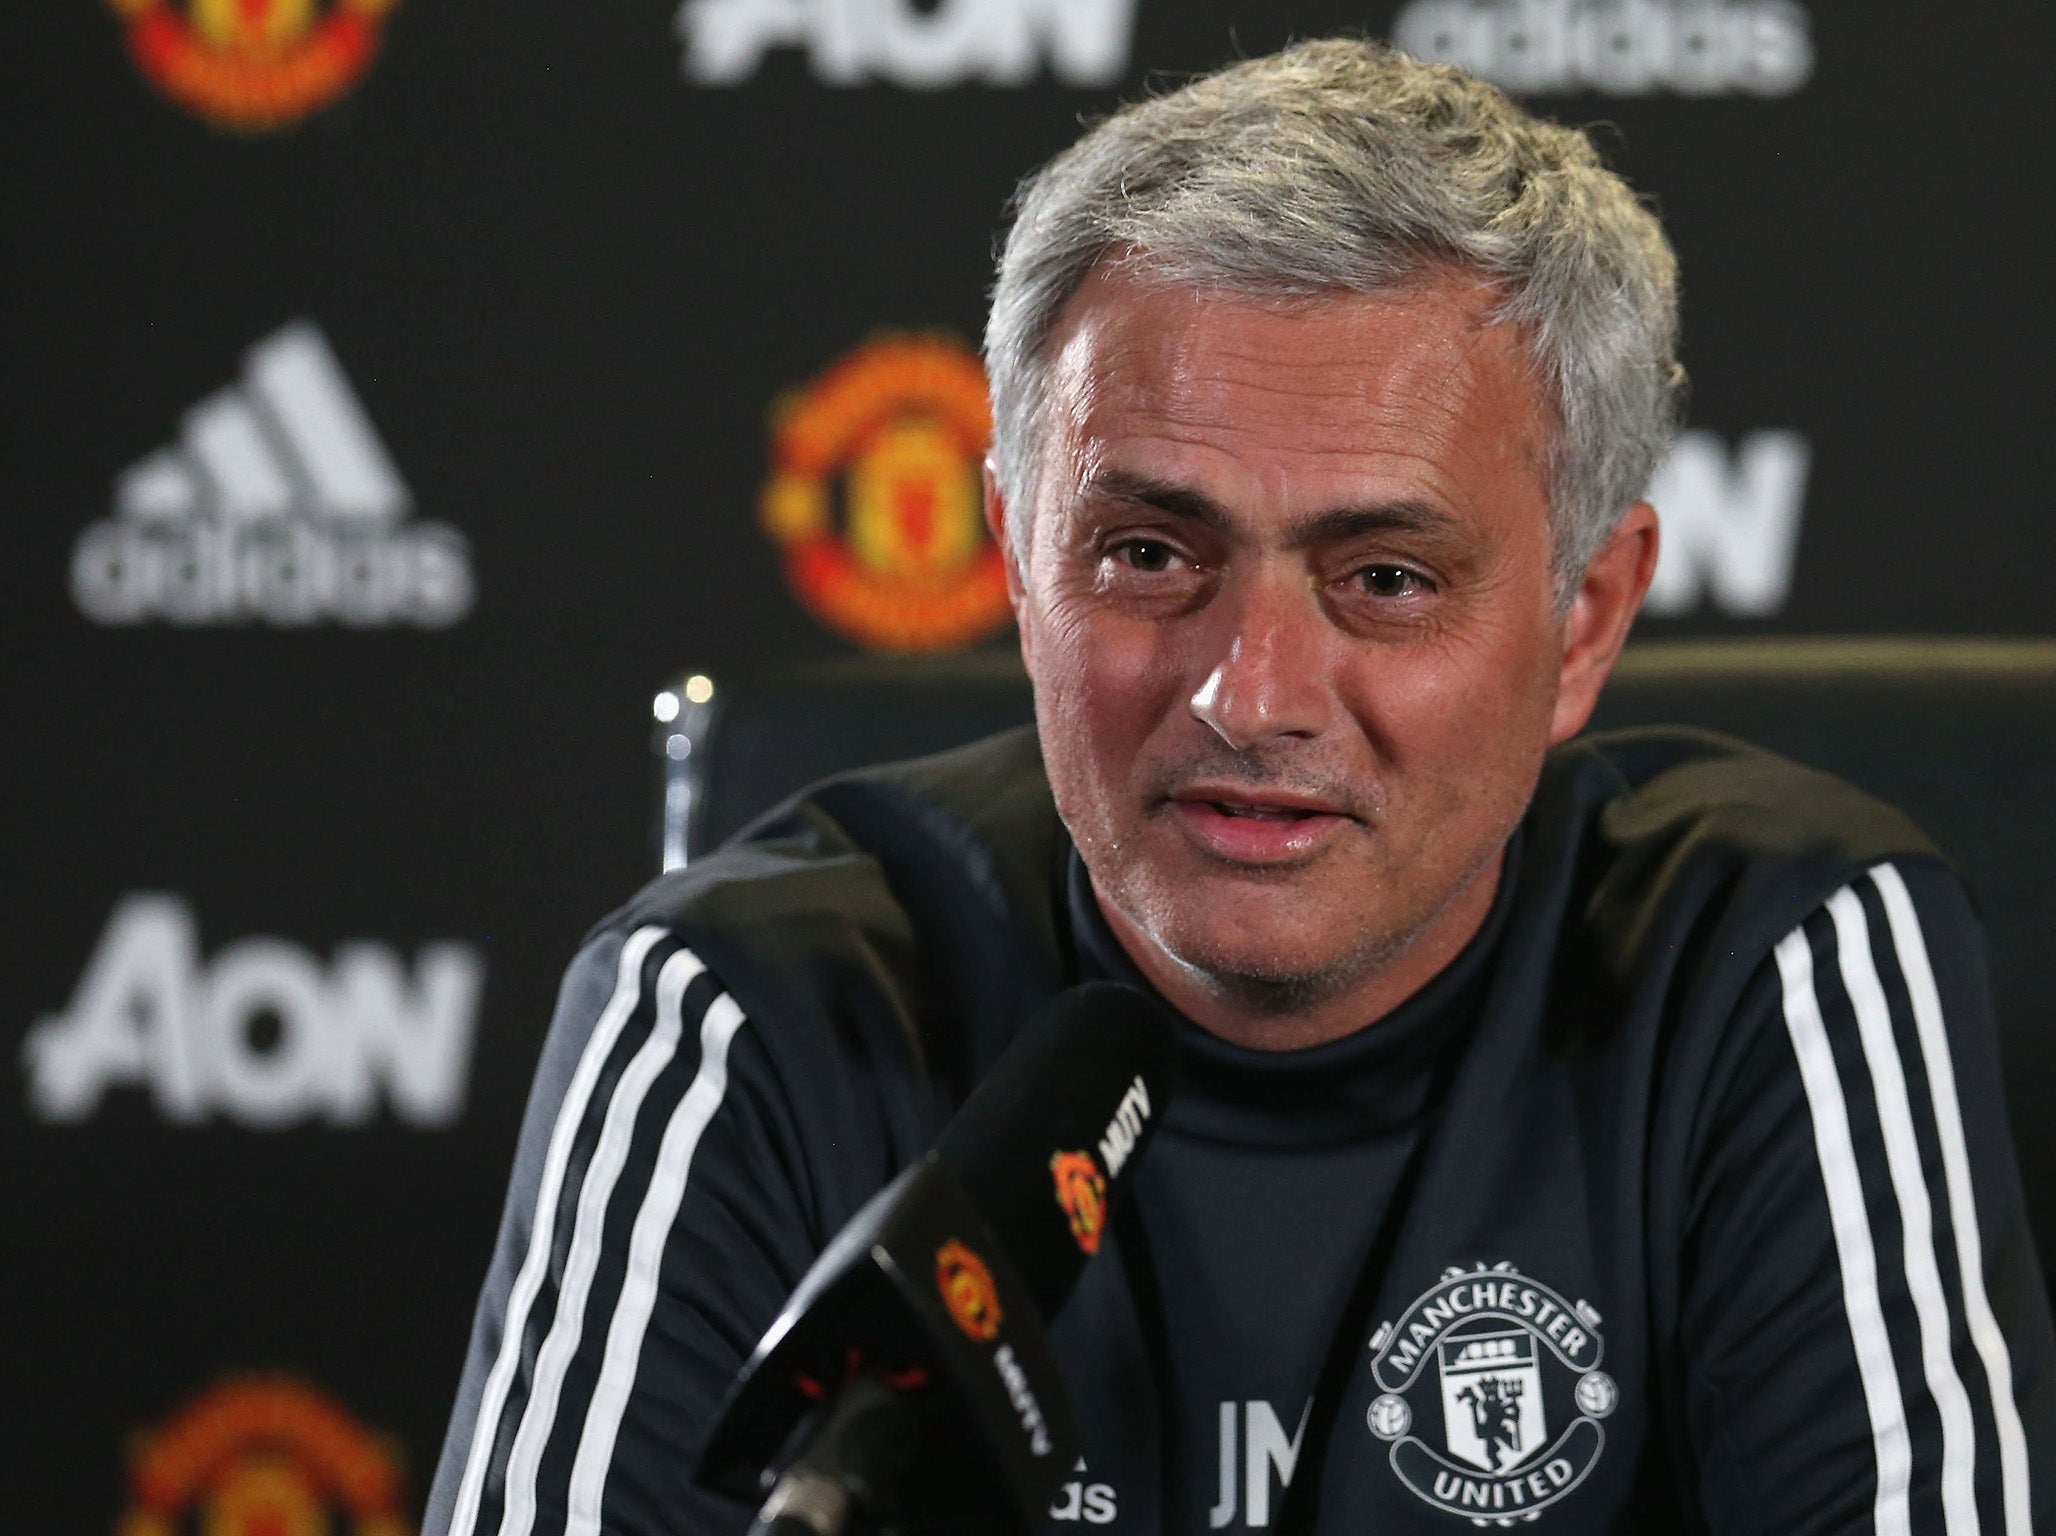 Jose Mourinho spoke to reporters before Stoke's visit on Monday